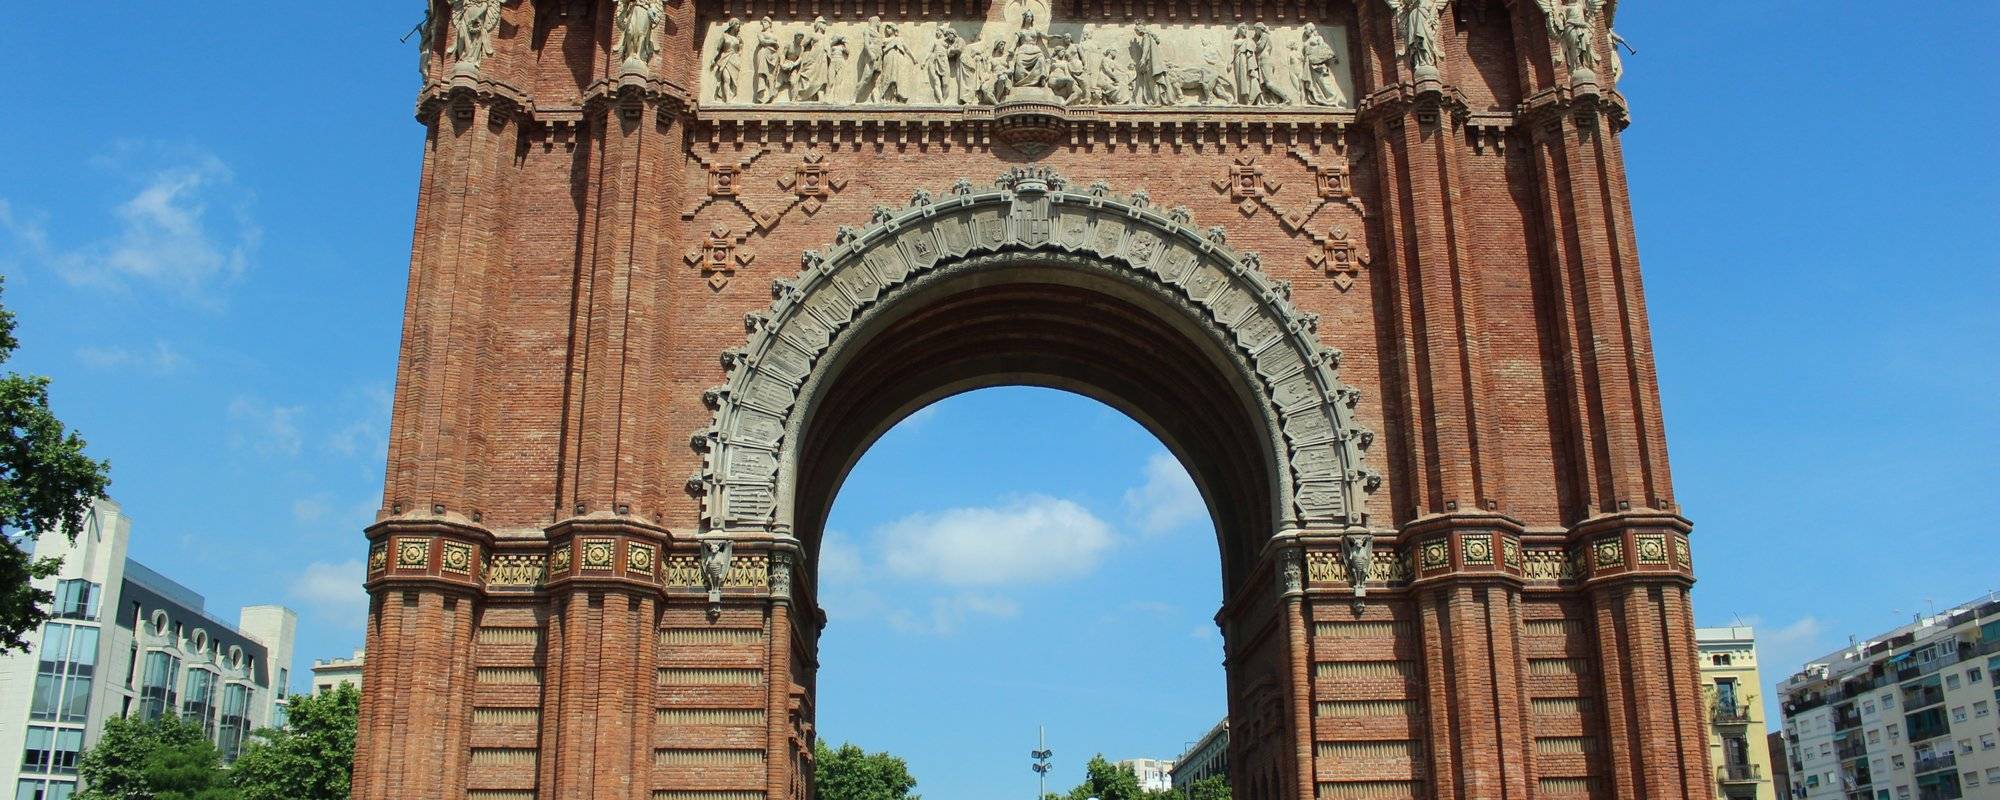 [EN/中]Barcelona (Spain) Arc de Triomf: Euro trip -Day 14 歐遊歷險(巴塞隆拿-西班牙)-第十四天: 凱旋門